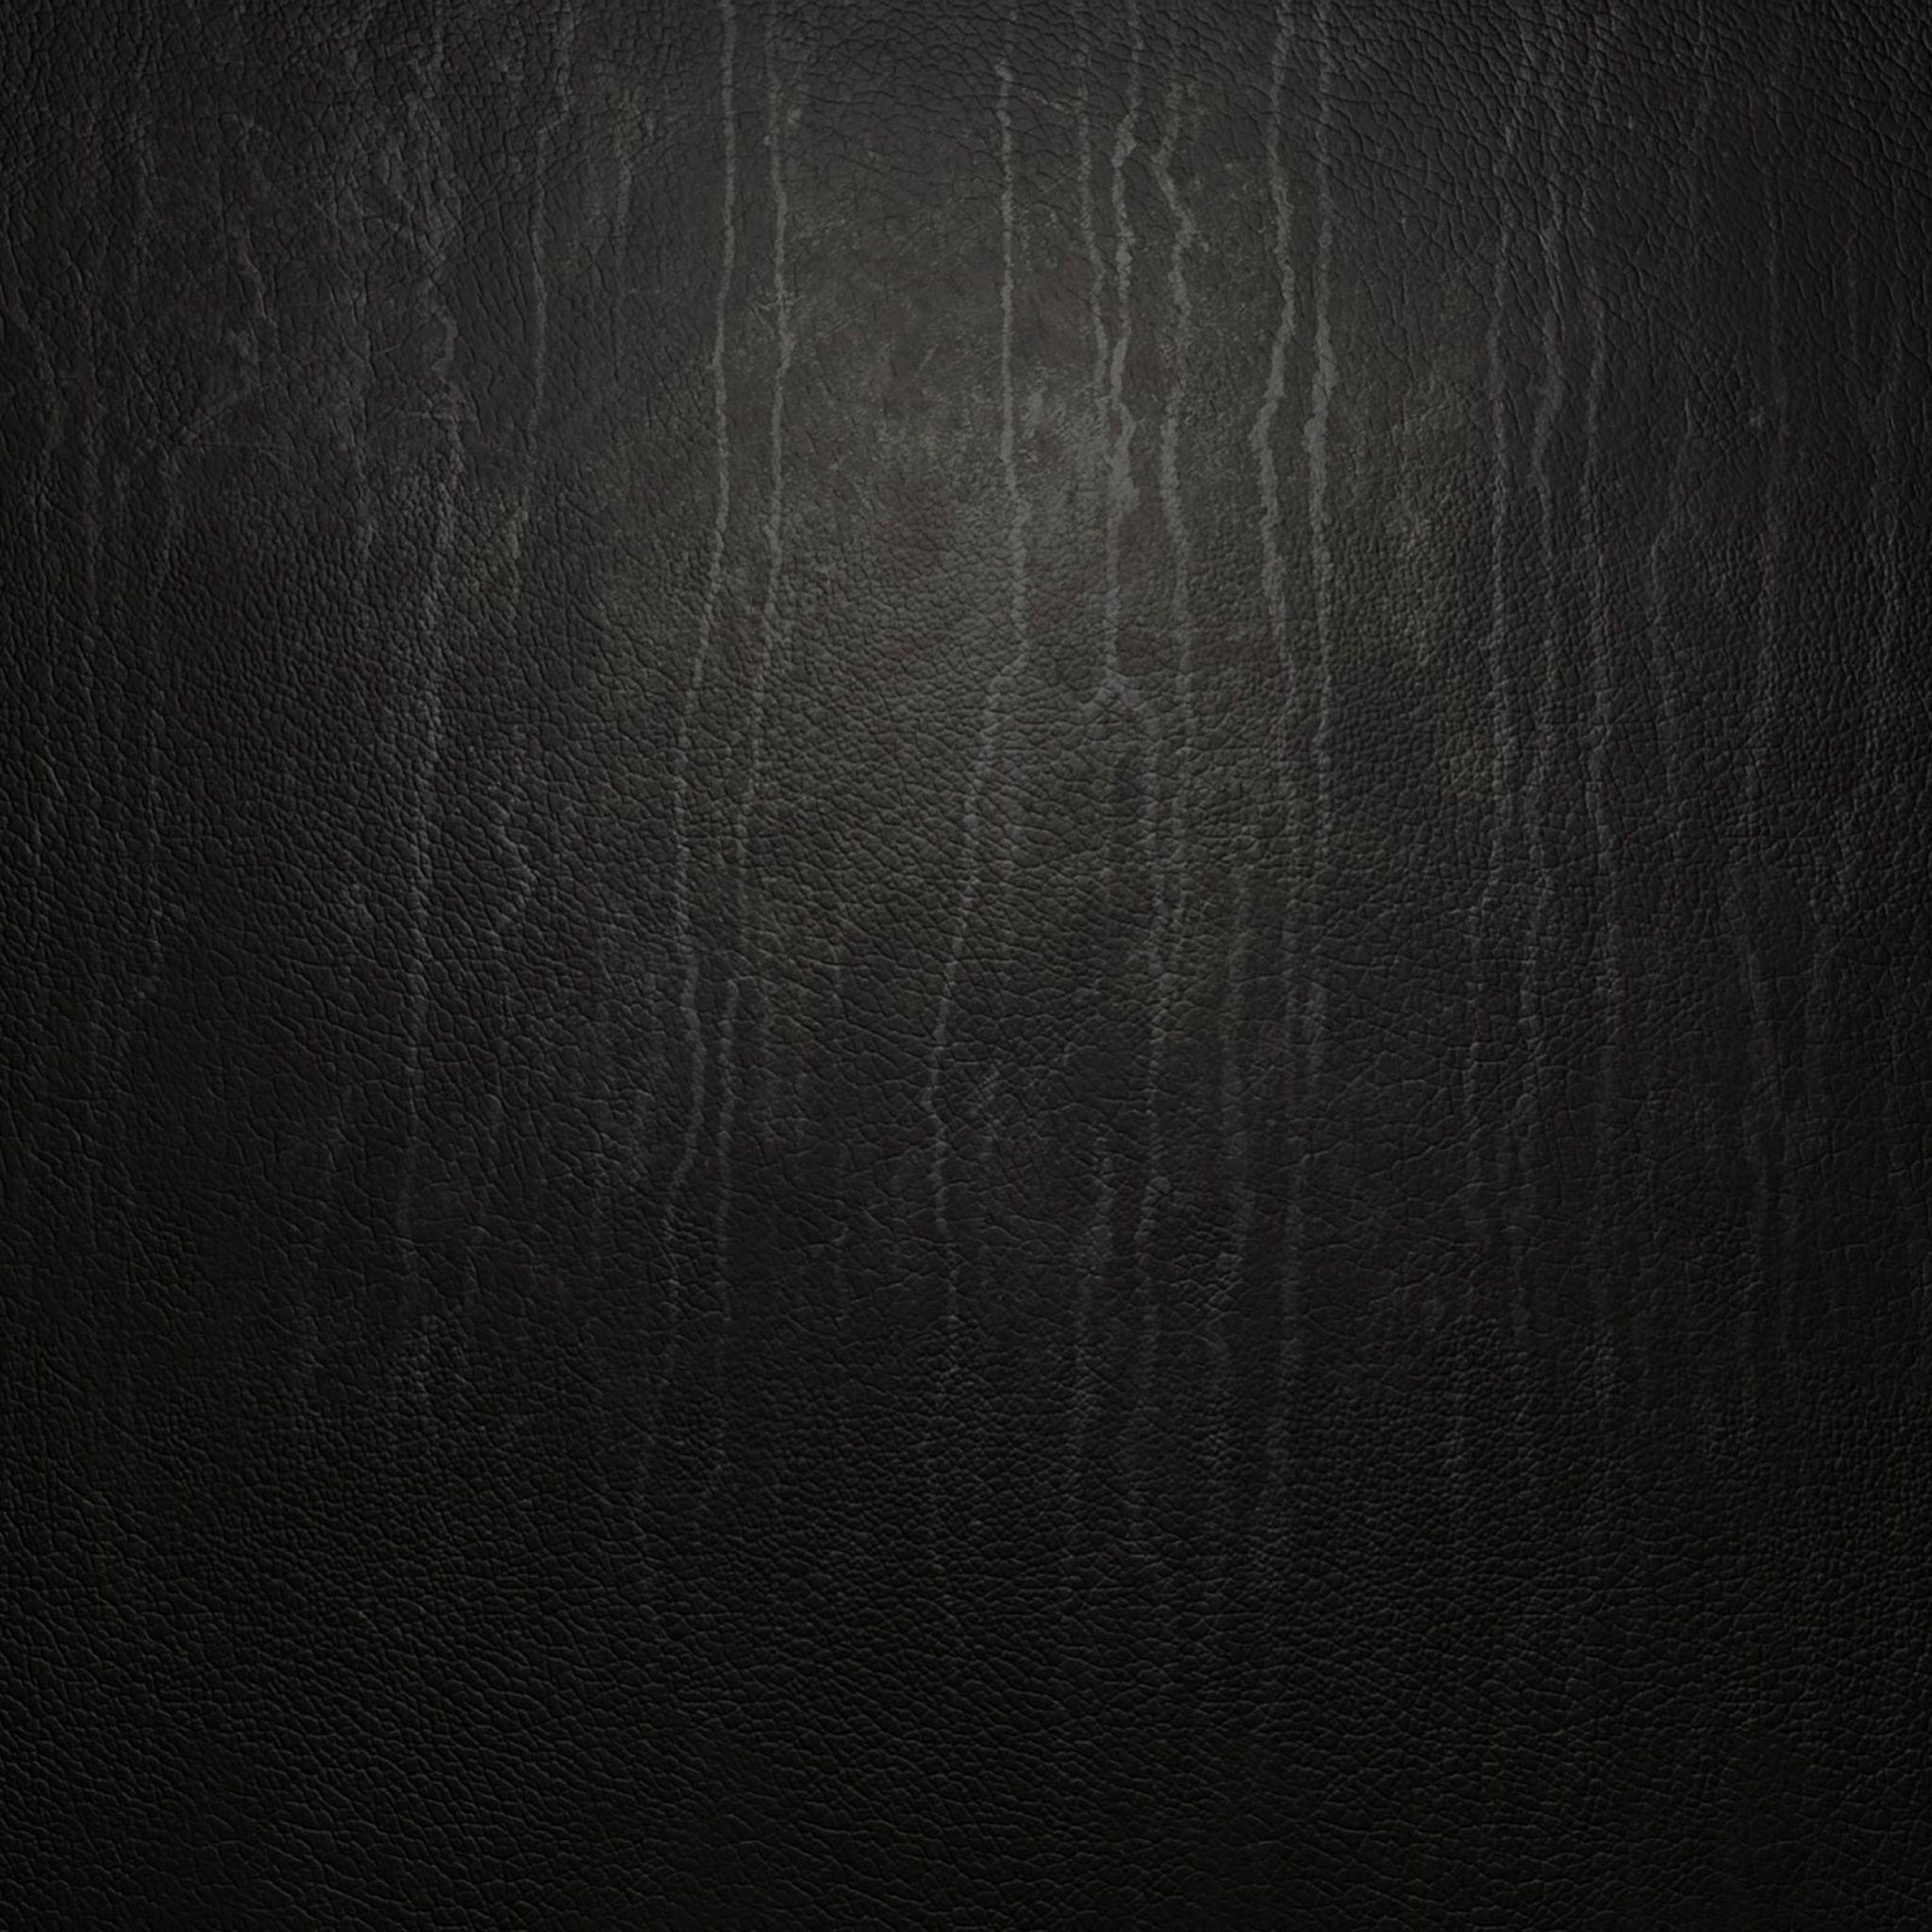 Black Leather IPad 4 Wallpaper